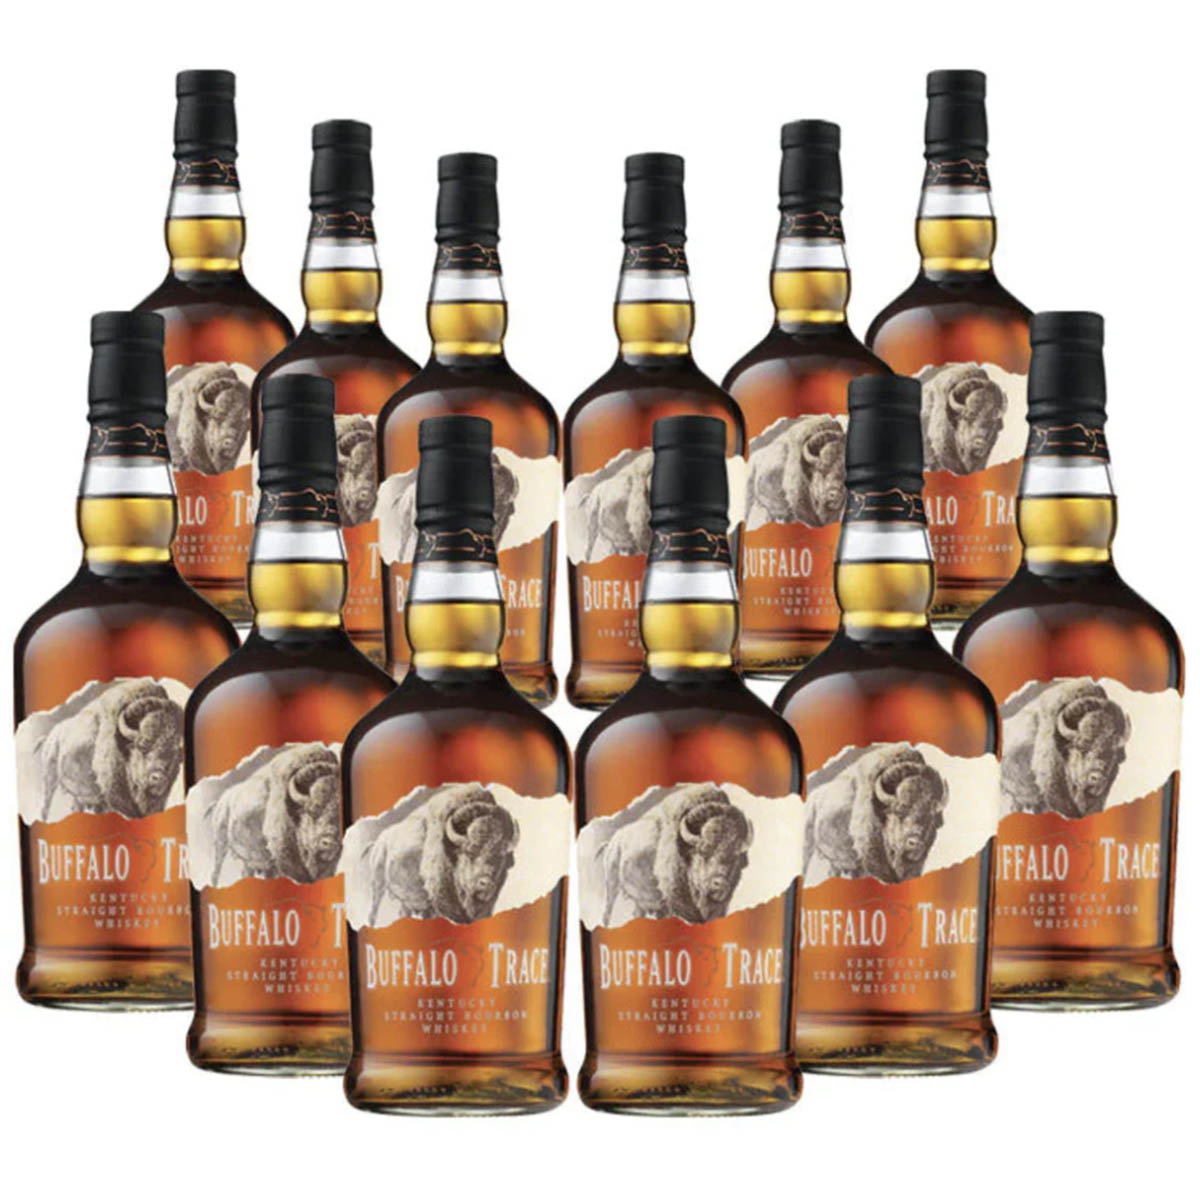 Buffalo Trace Kentucky Straight Bourbon Whiskey Full Case of 12